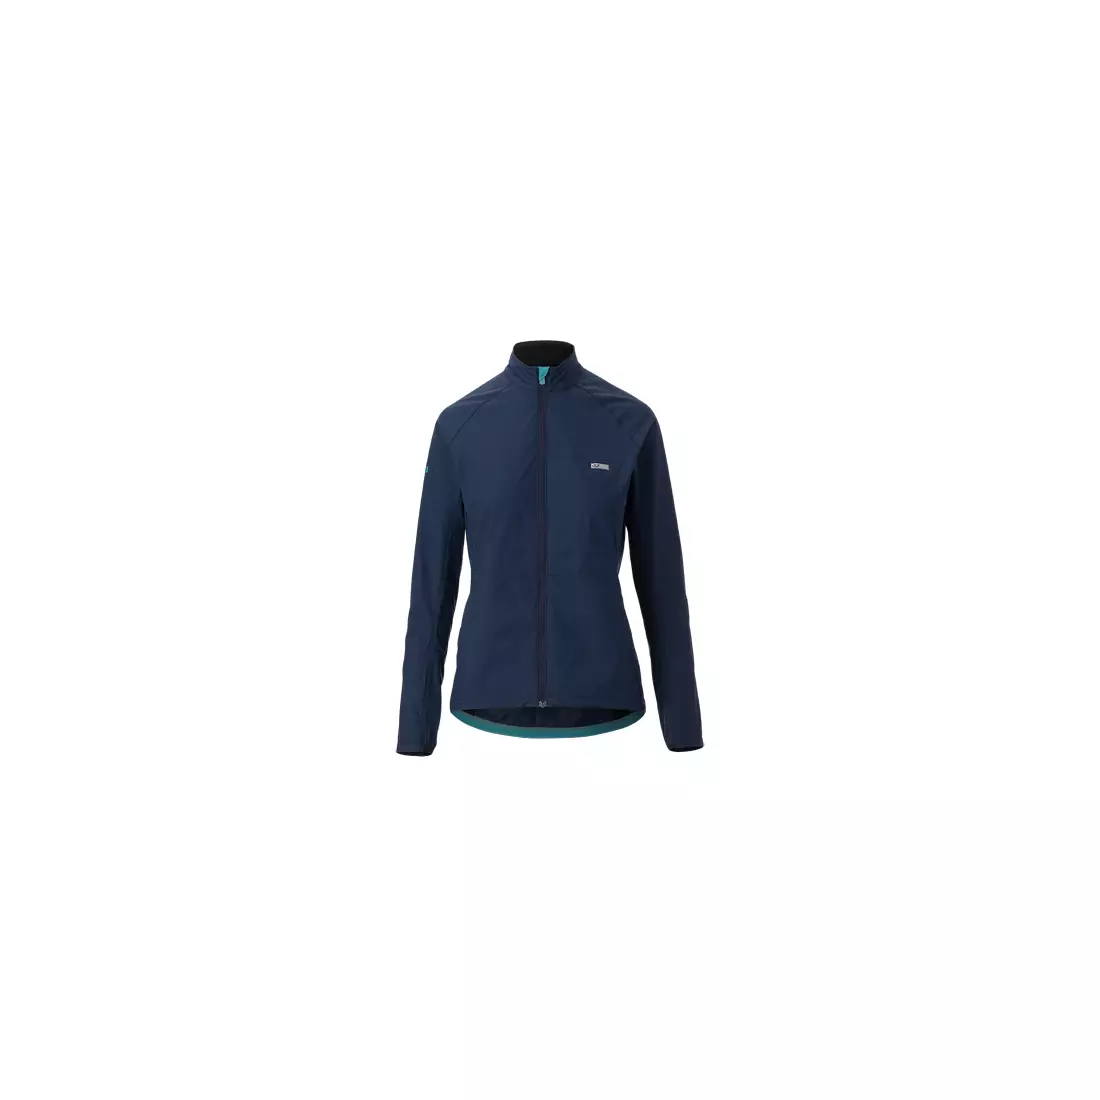 GIRO ladies' windcheater jacket stow midnight blue GR-7106744